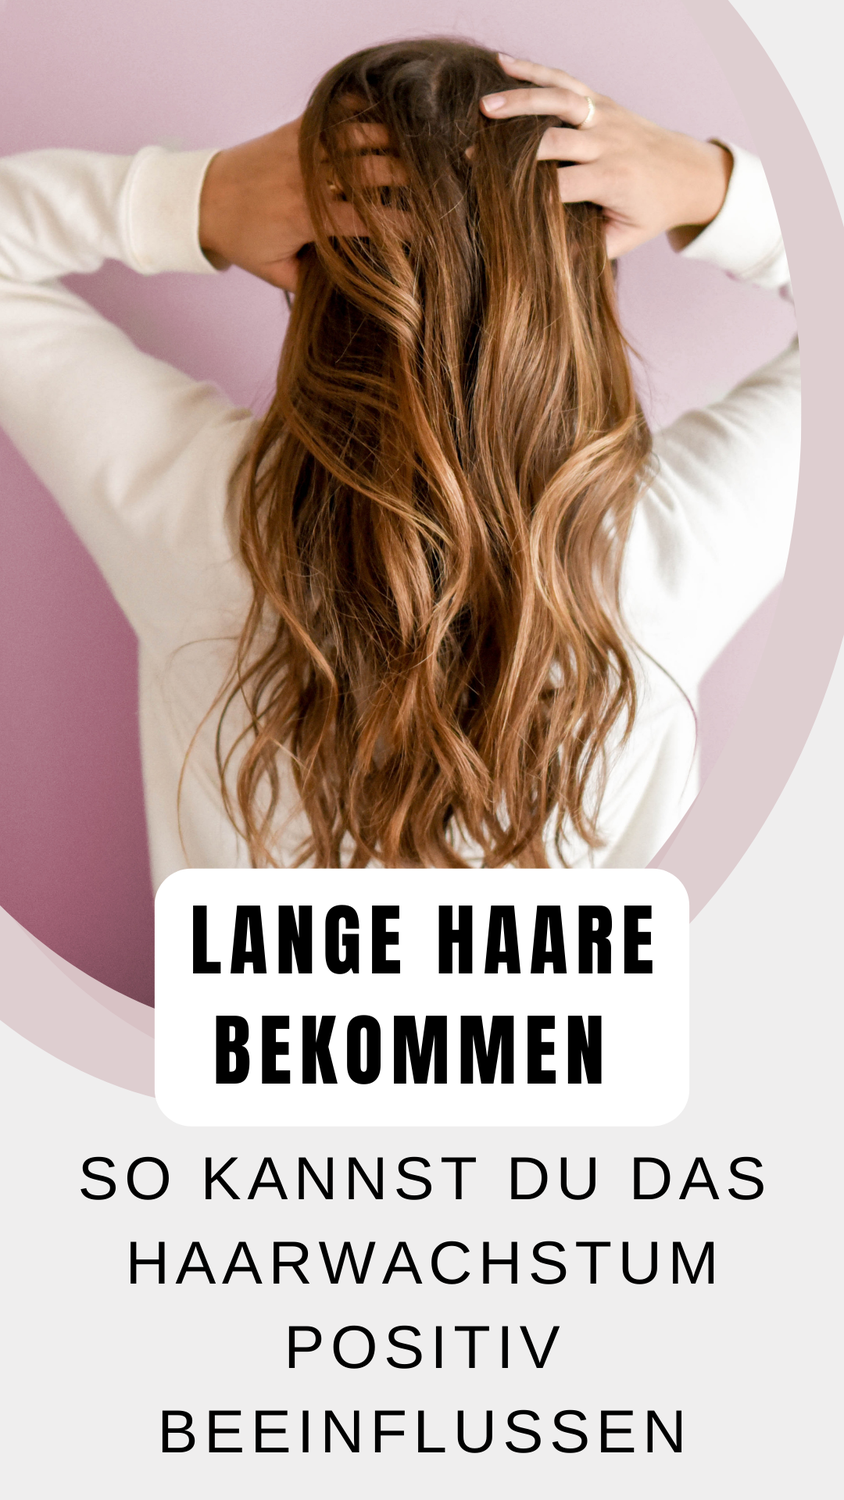 Lange Haare bekommen | Tipps | Haarwachstum positive beeinflussen | Plantur 21 | Friseurmeinung von Sabrina Schuster